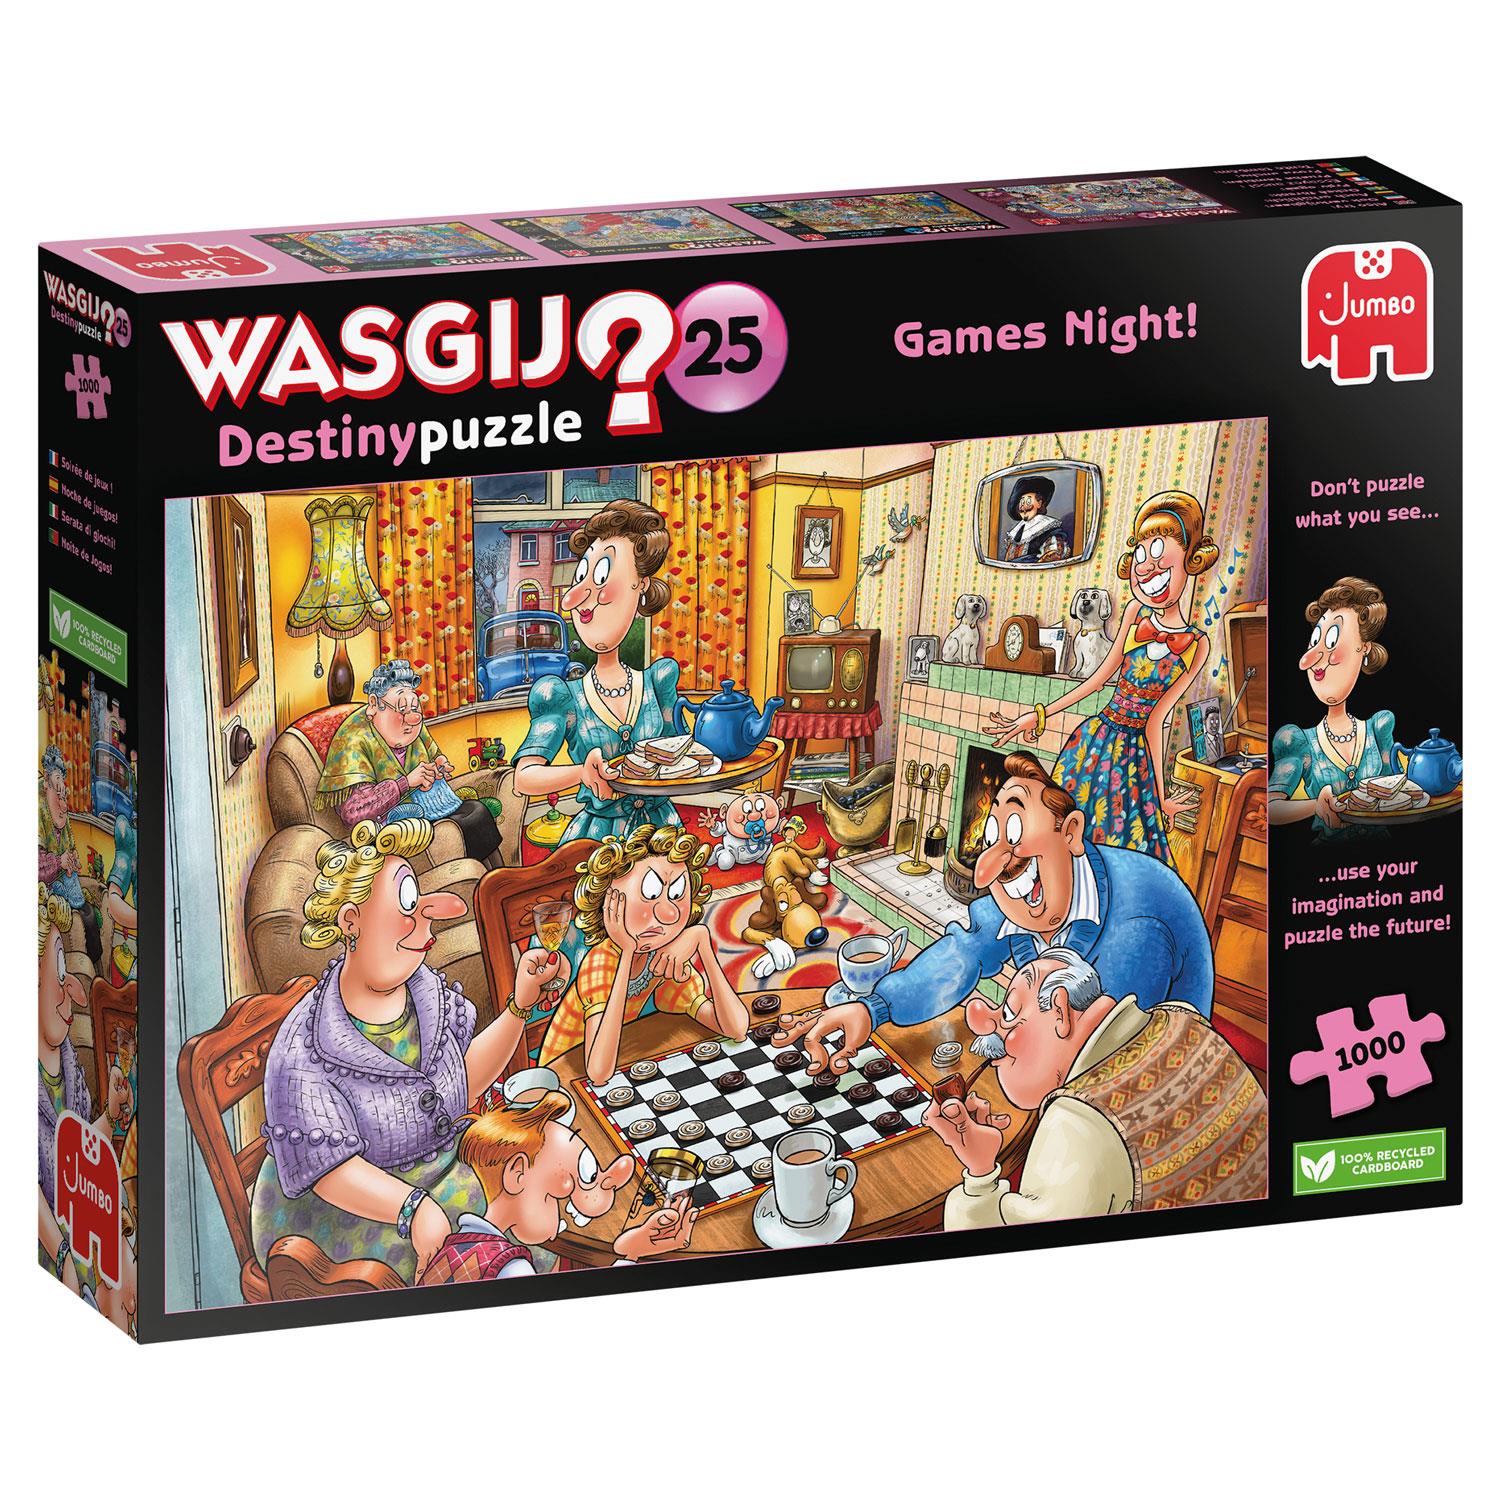 Wasgij Destiny 25 Games Night! Jigsaw Puzzle (1000 Pieces)